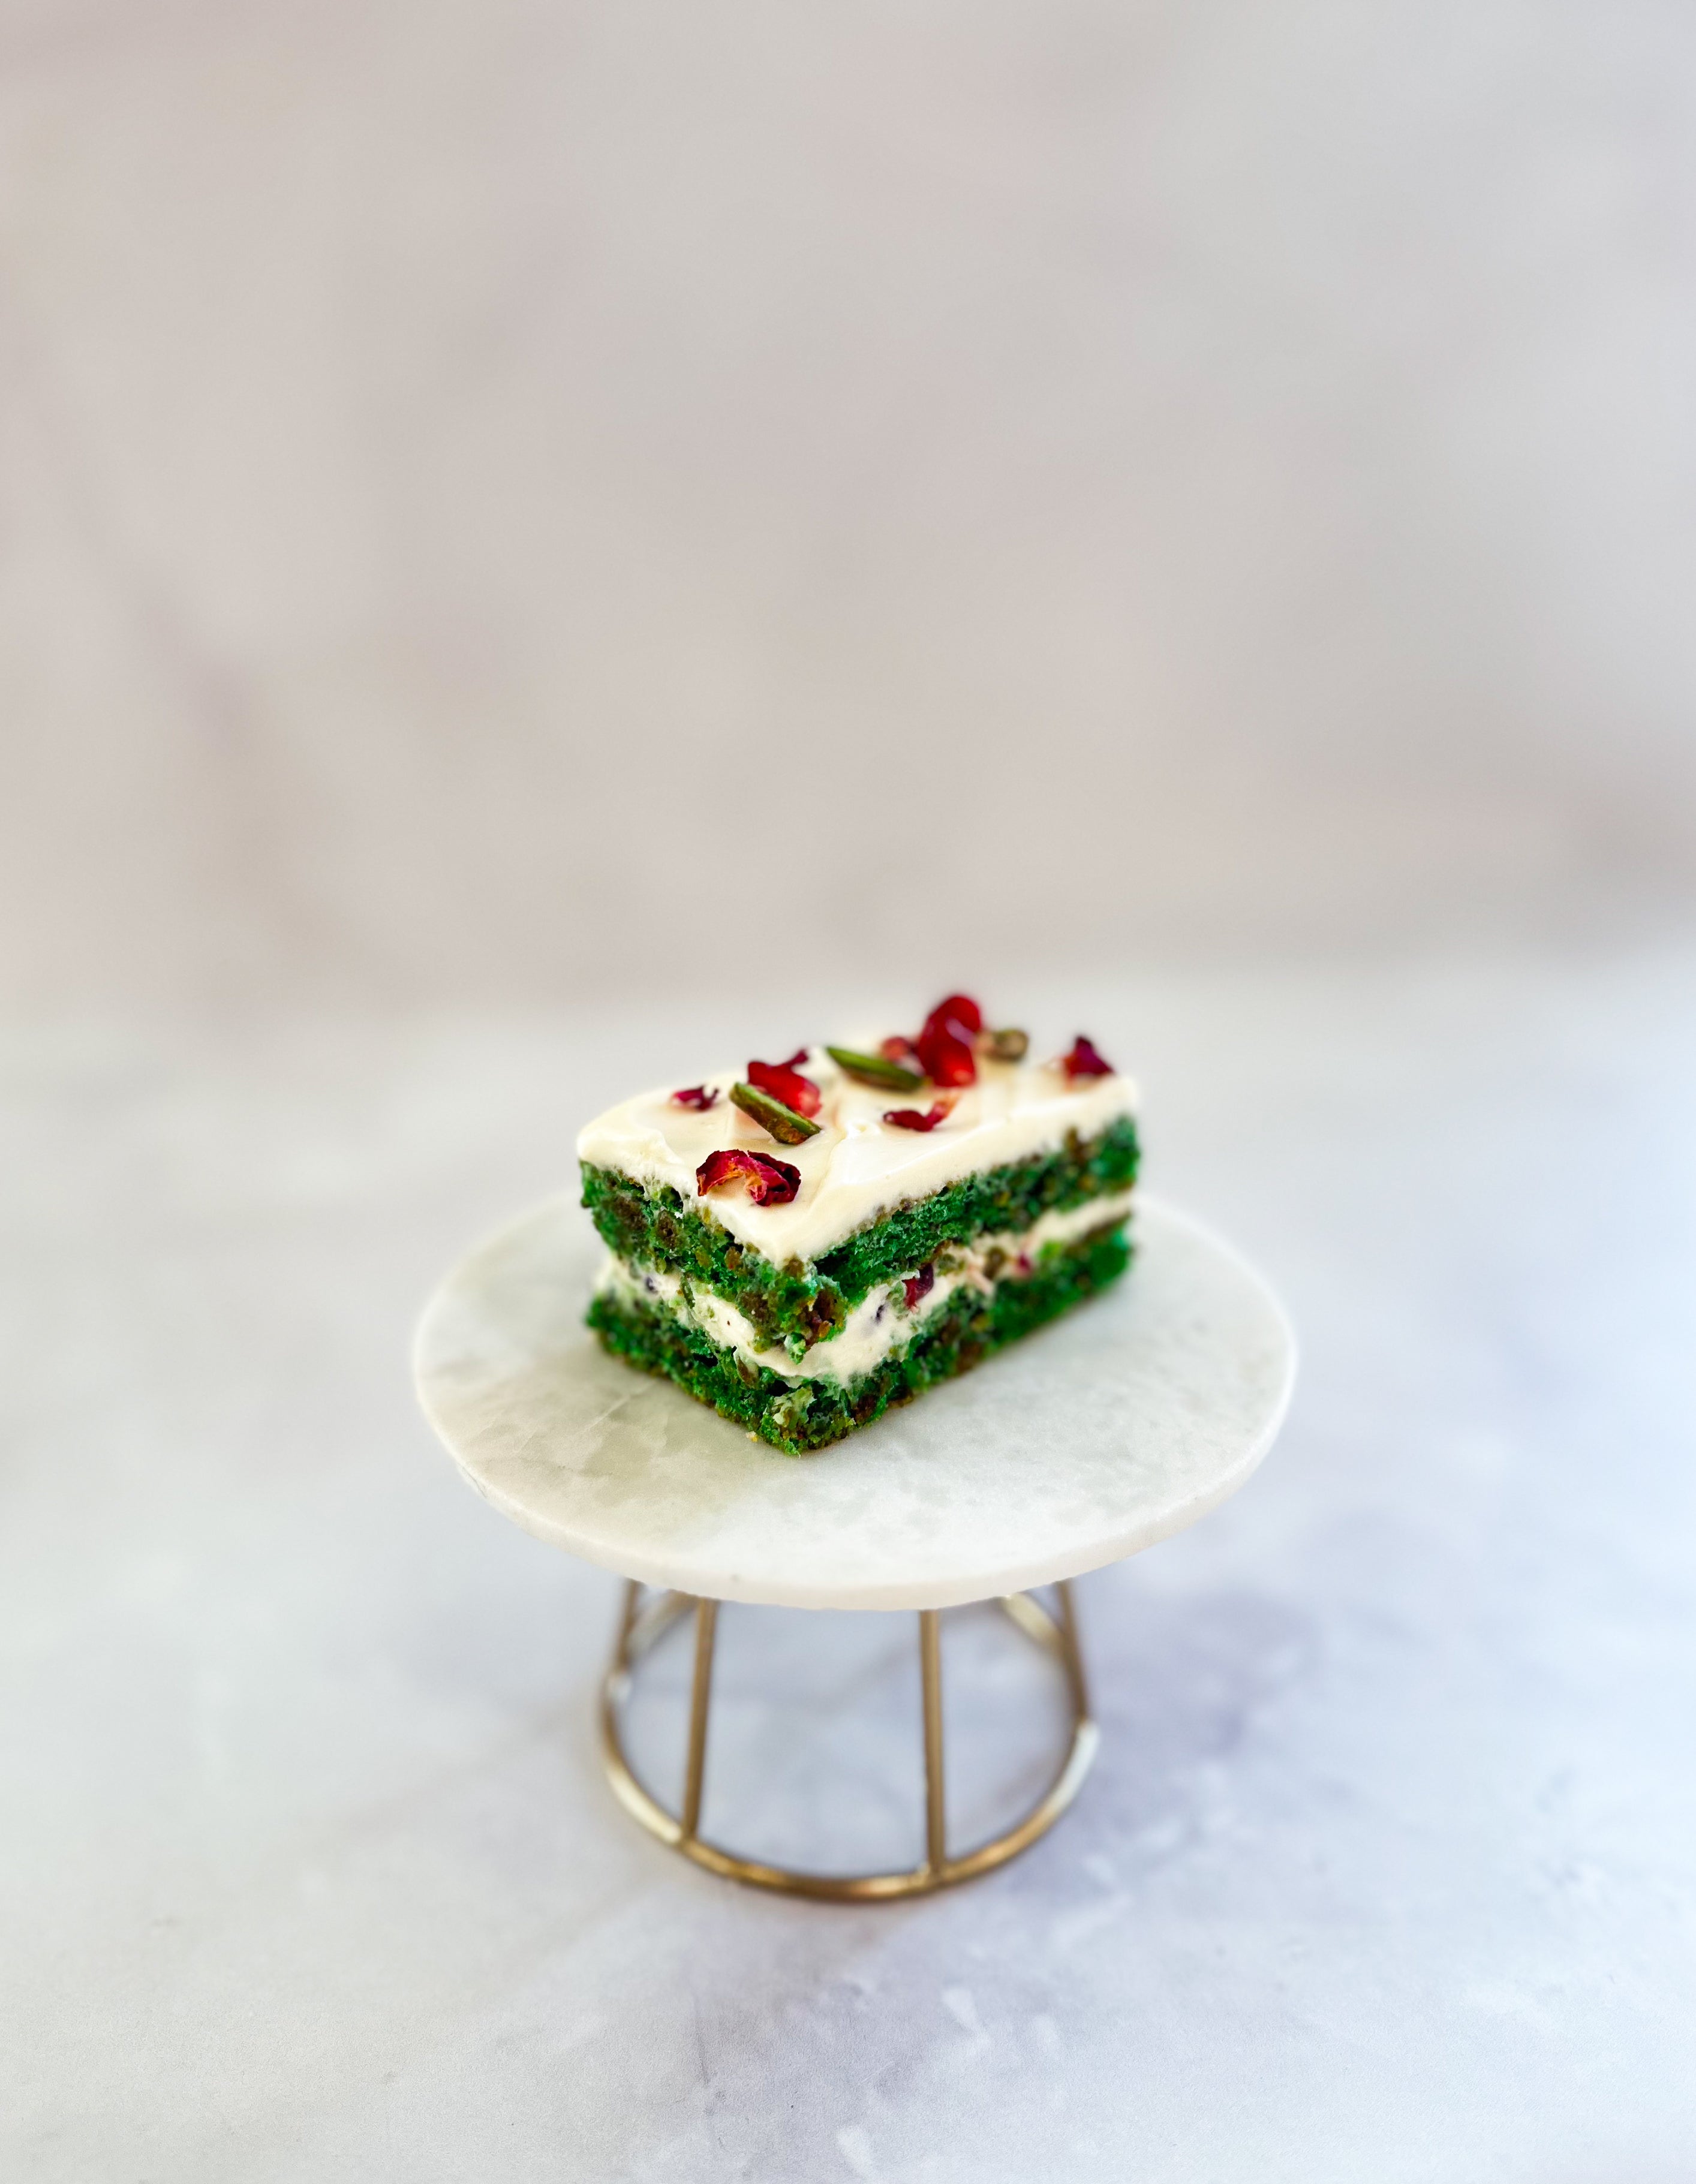 Pistachio and pomegranate cake